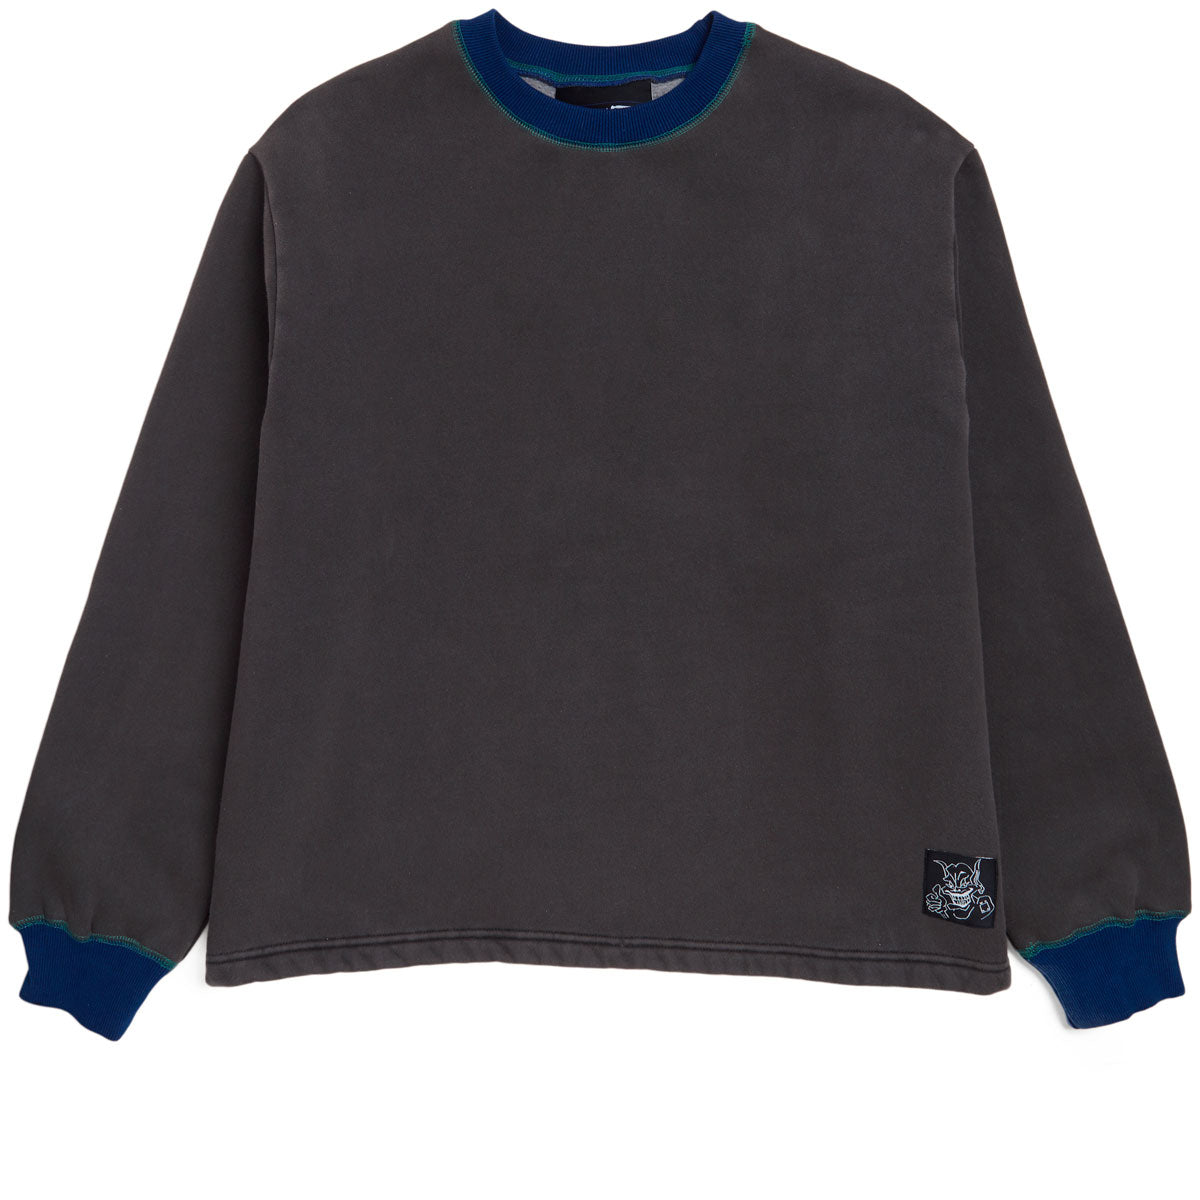 WKND Pigment Jumper Sweatshirt - Black image 1